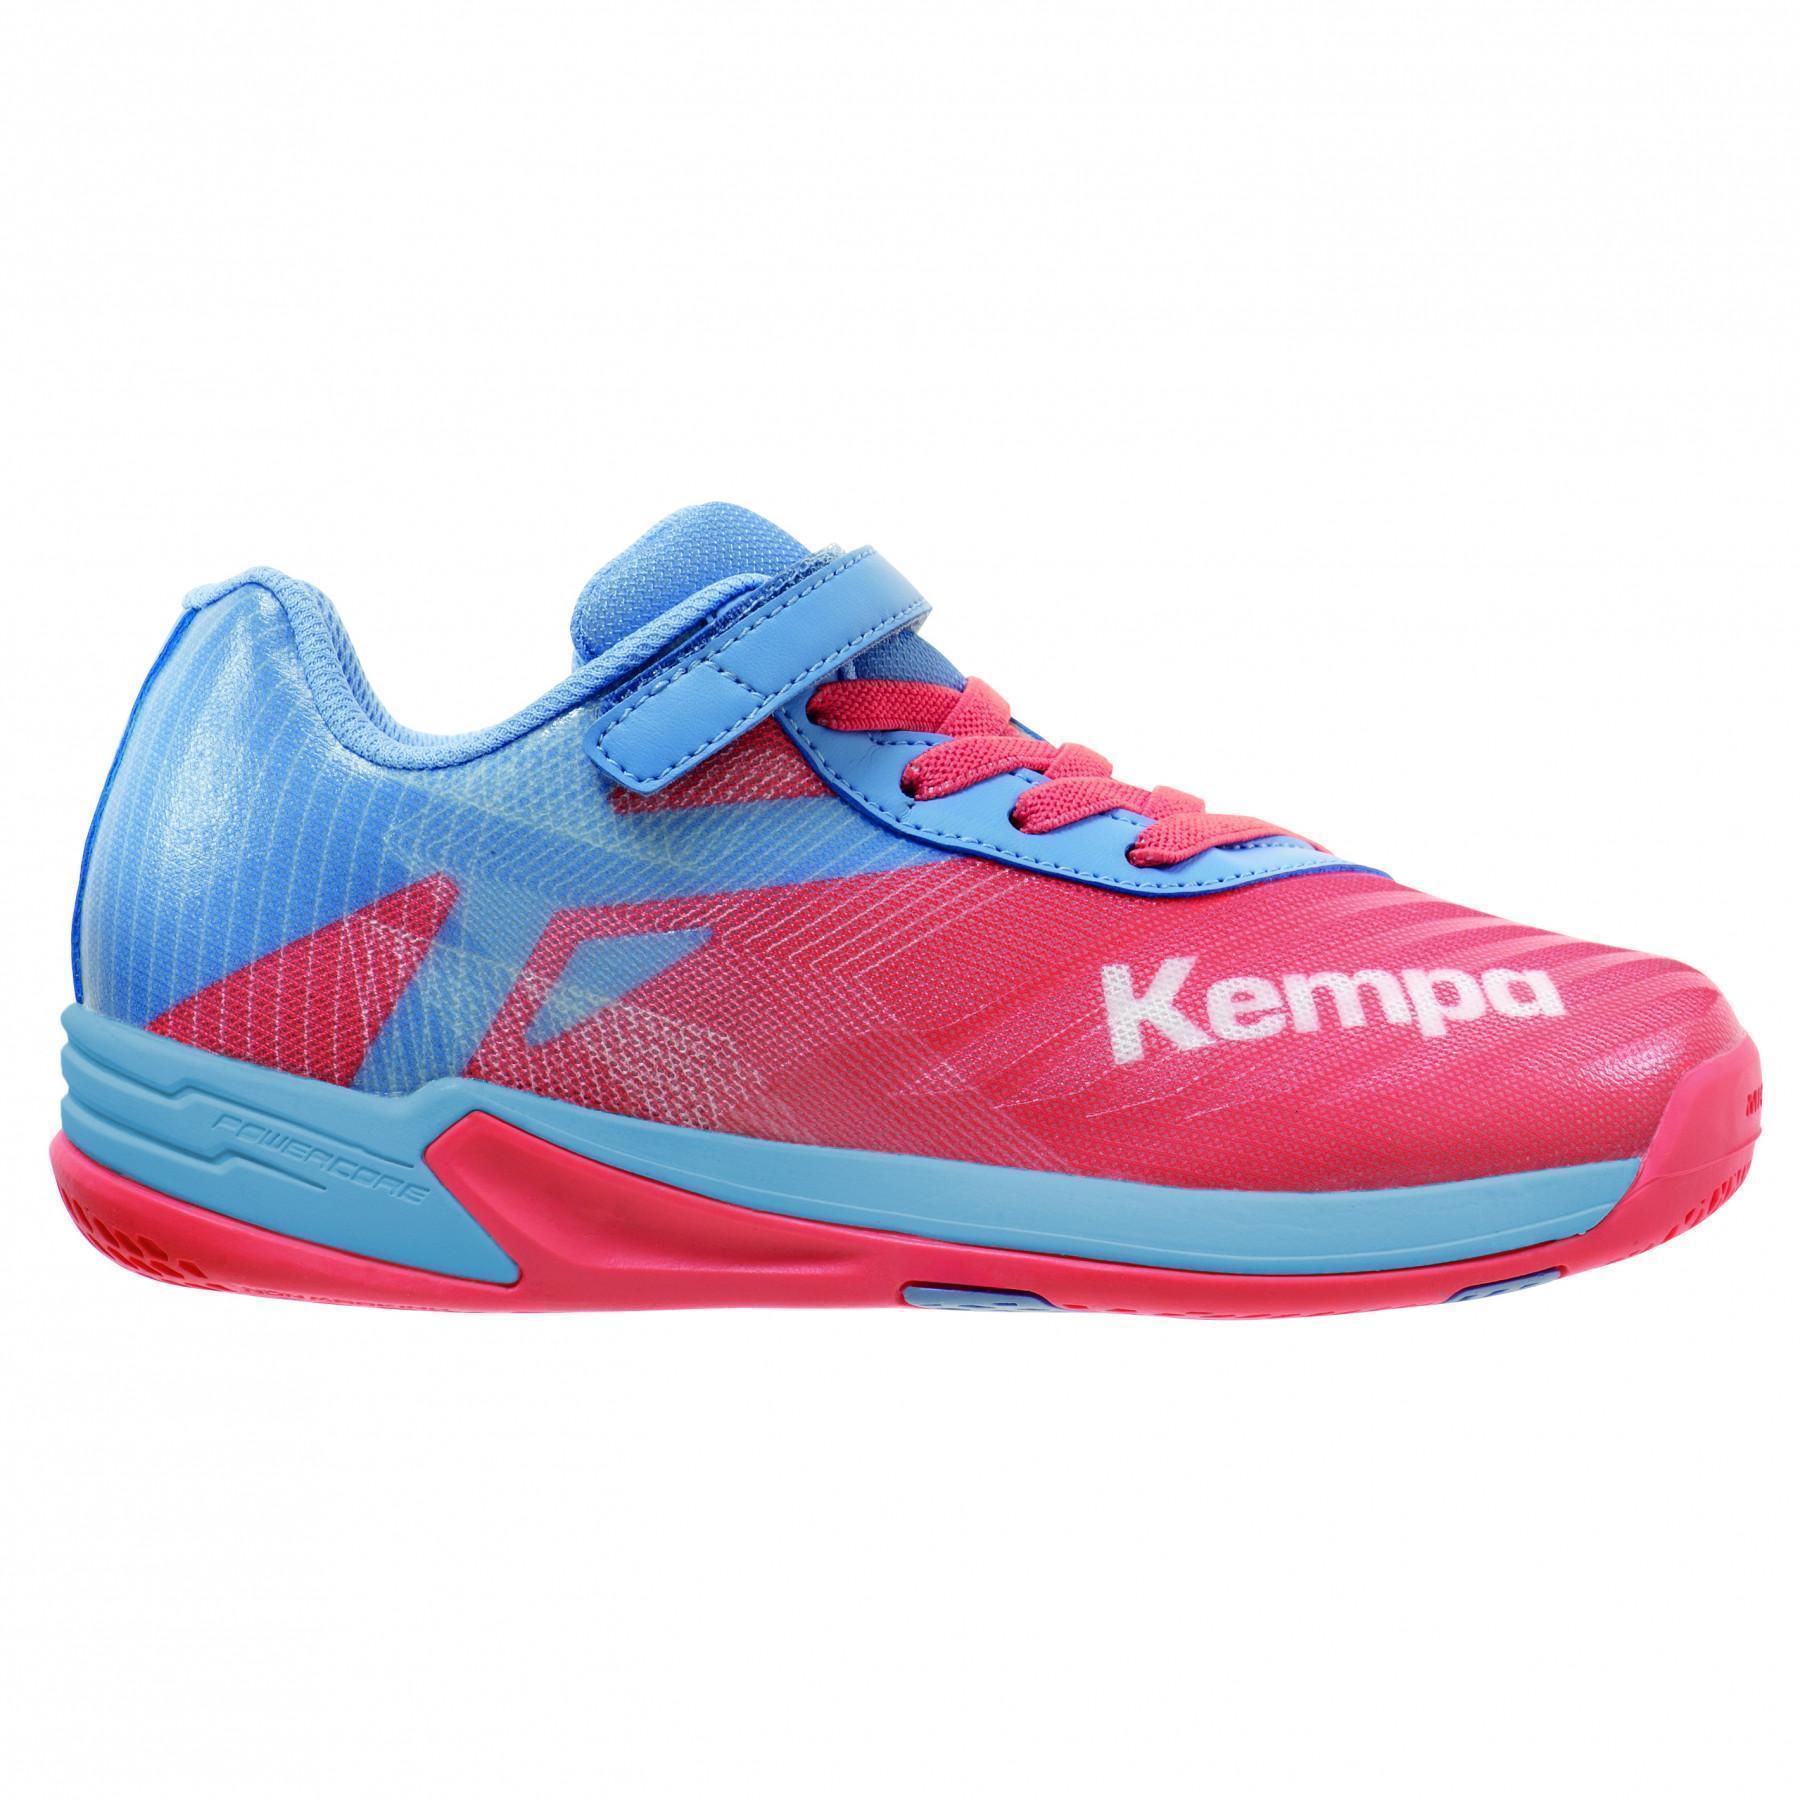 Kempa Chaussures Velcro Junior Wing 2.0 